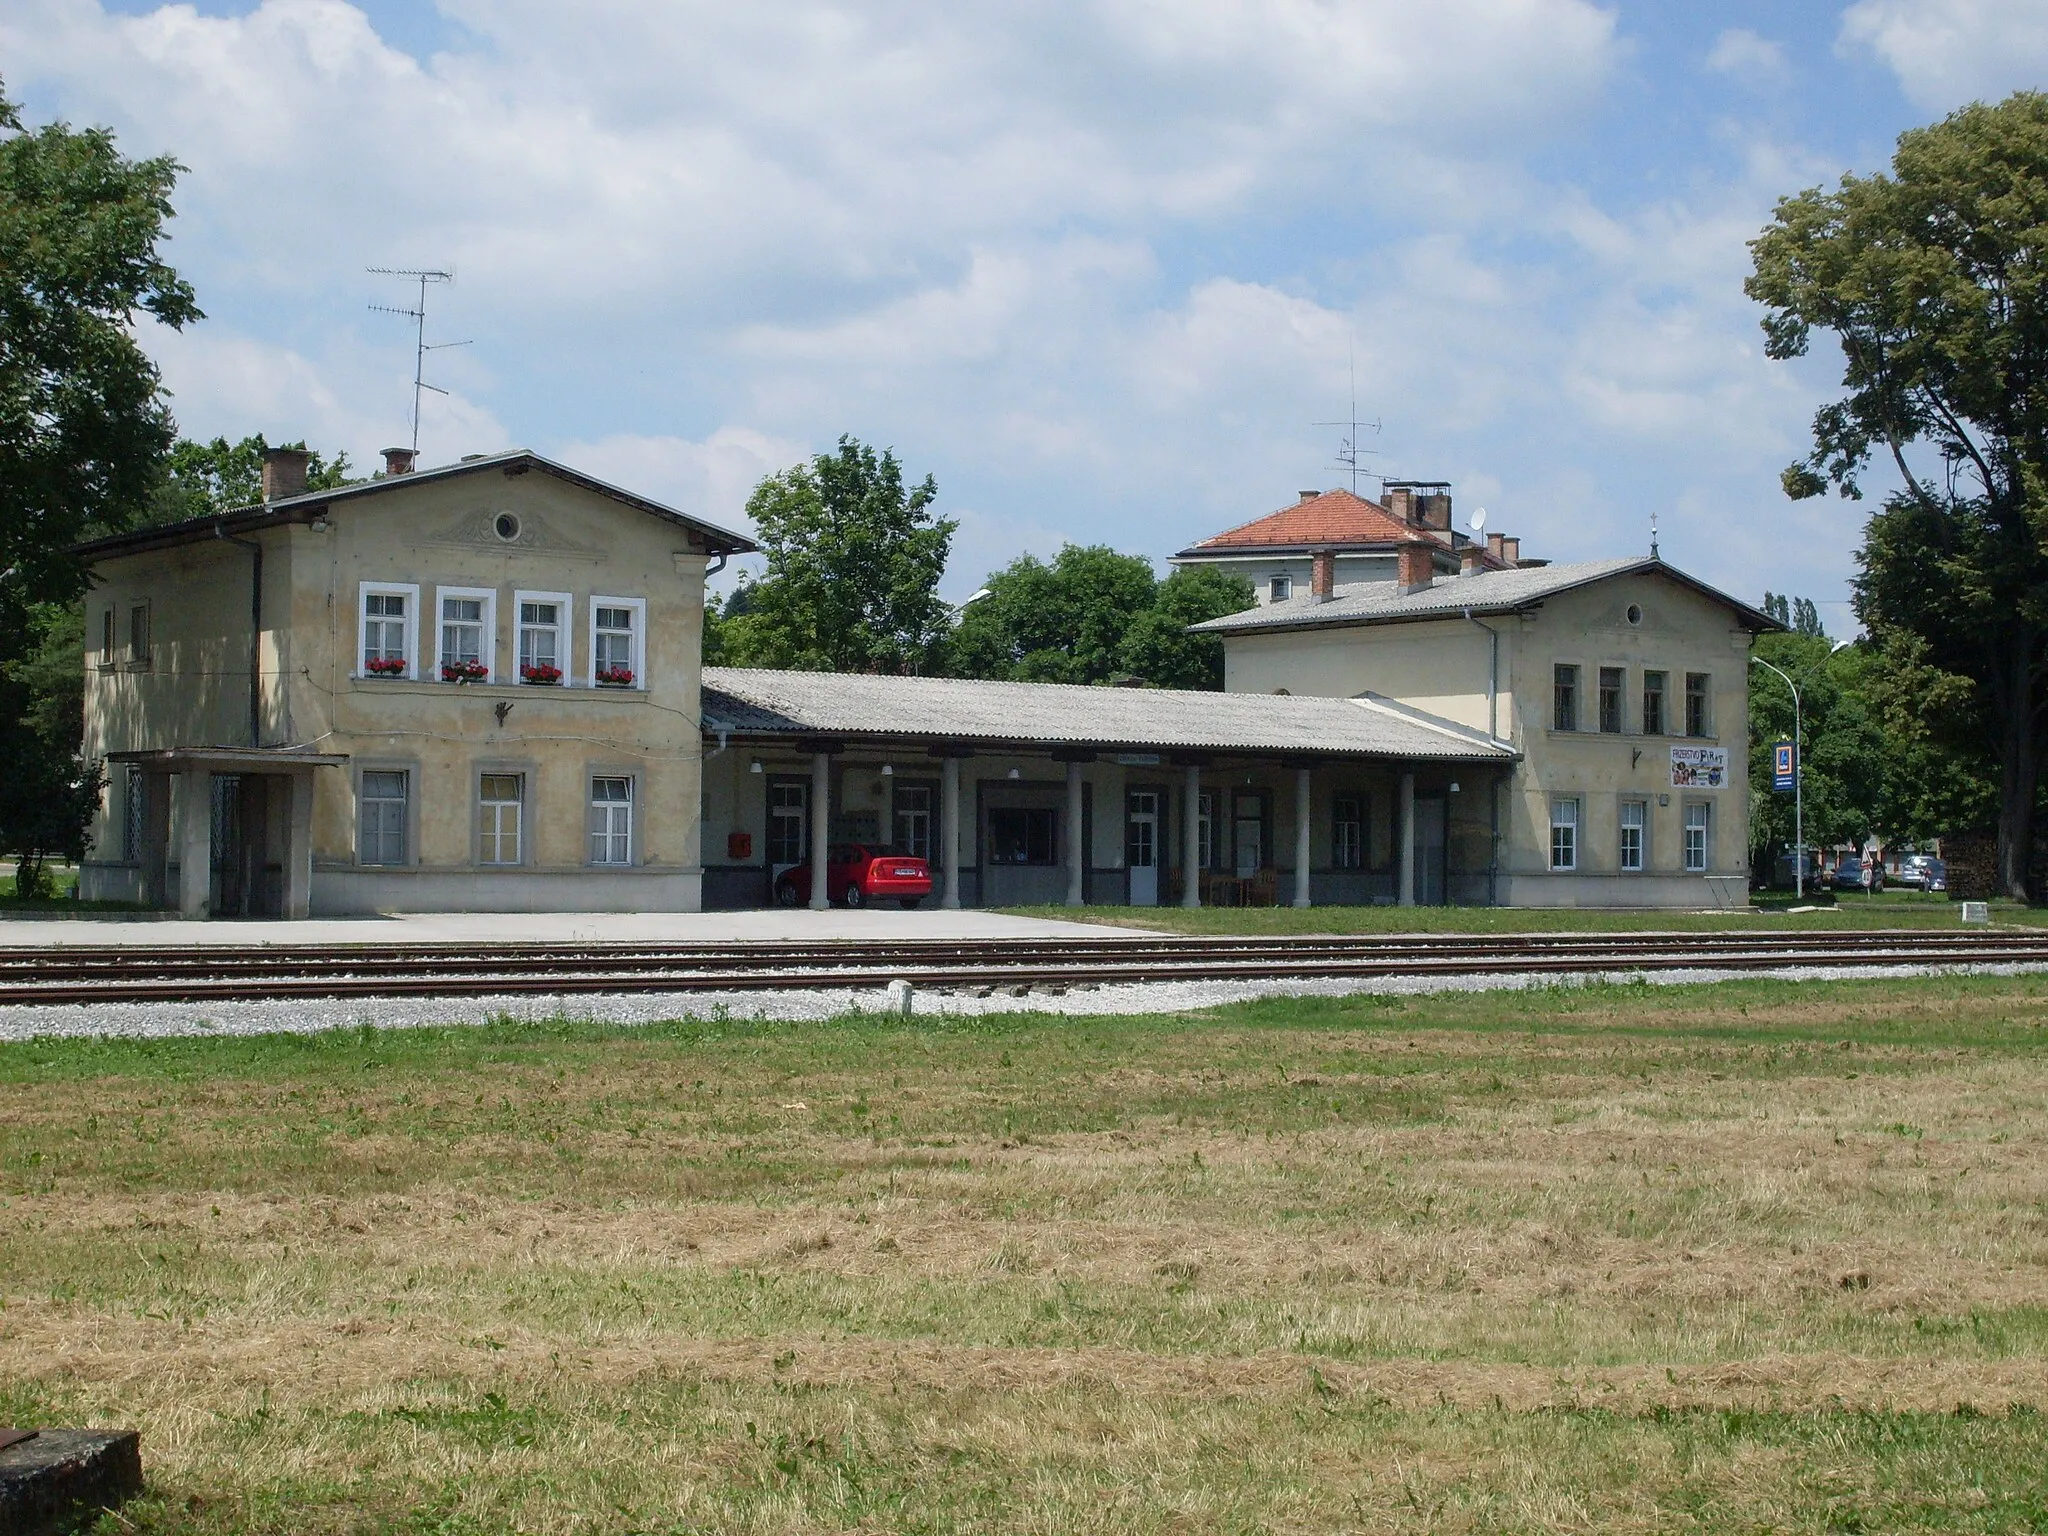 Photo showing: Train station in Gornja Radgona, Slovenia. Built in 1883.